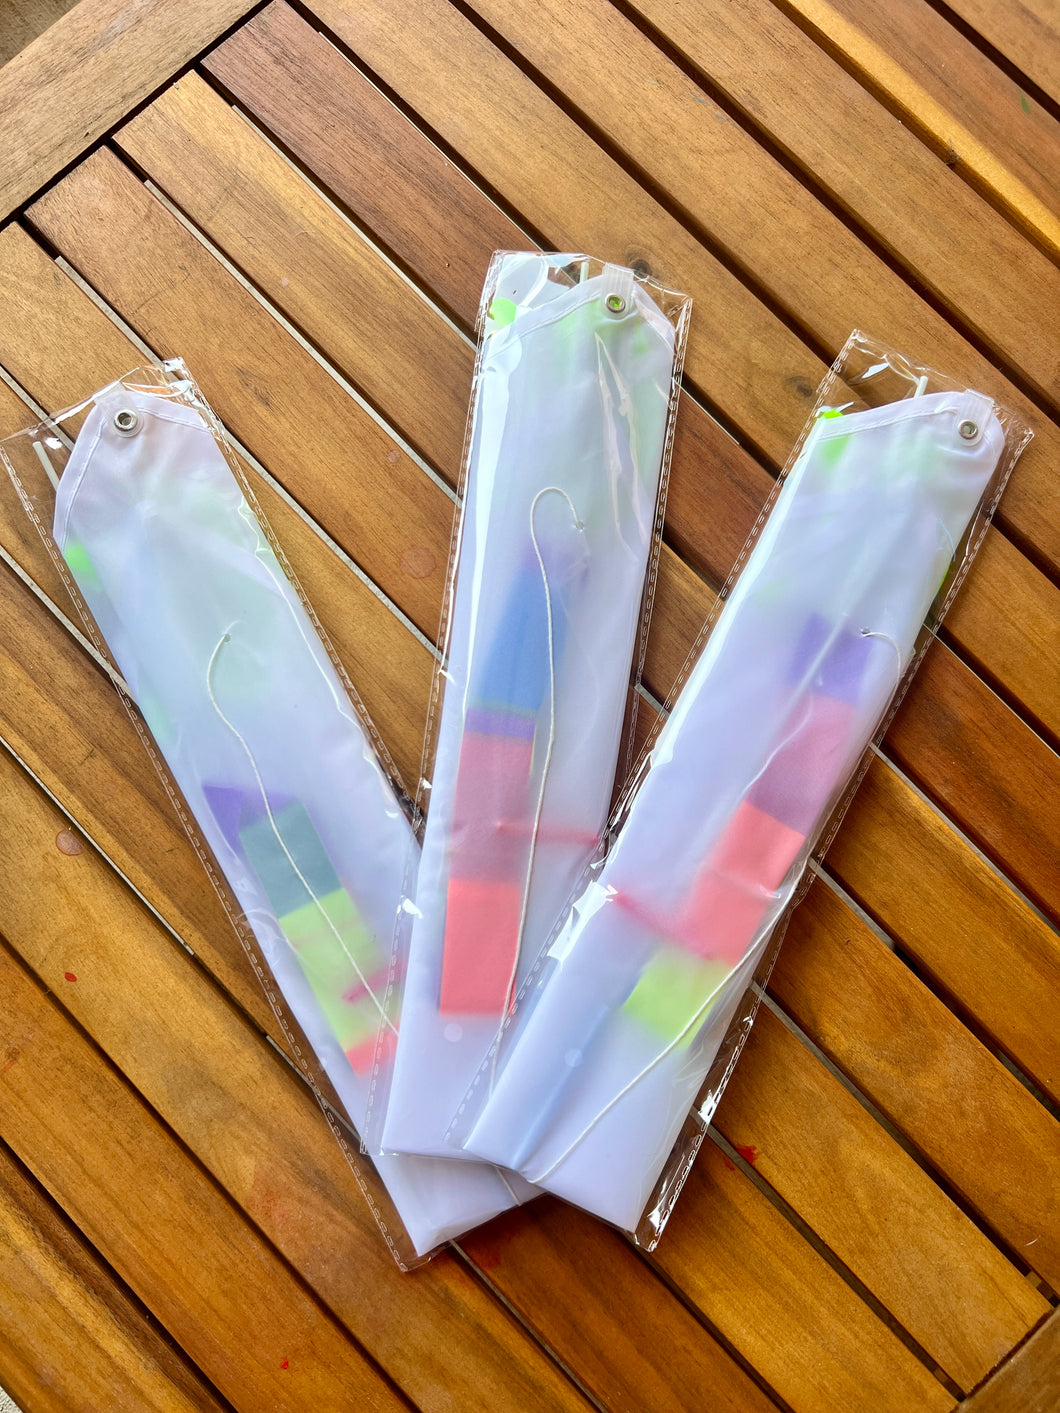 Get Kites Delivered To Your Door - Avy's Sunshine Kite Festival